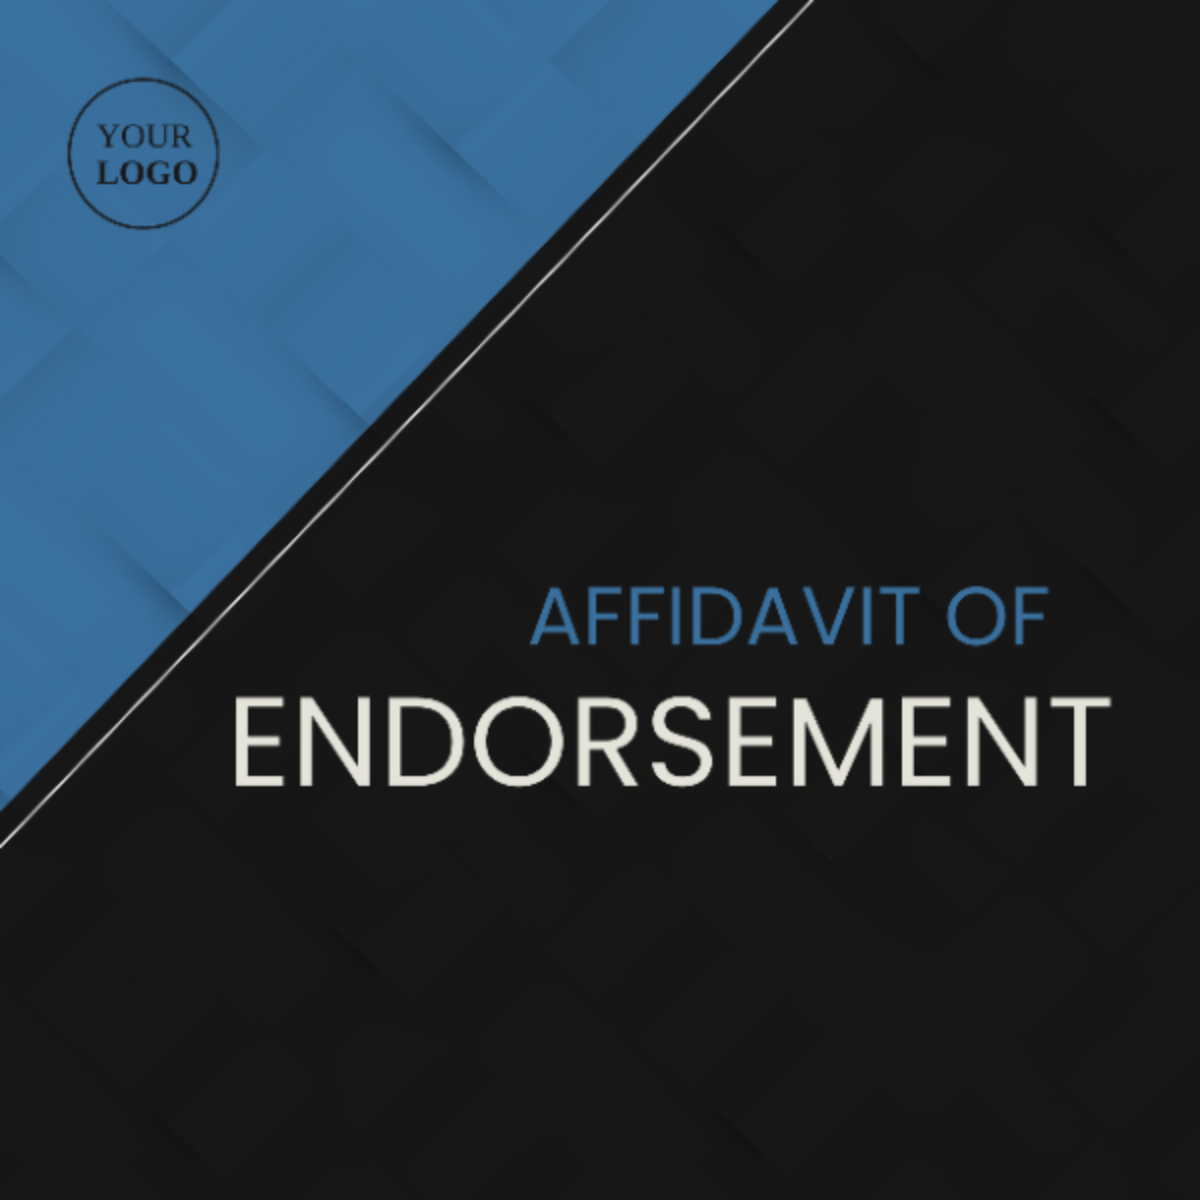 Affidavit of Endorsement Template